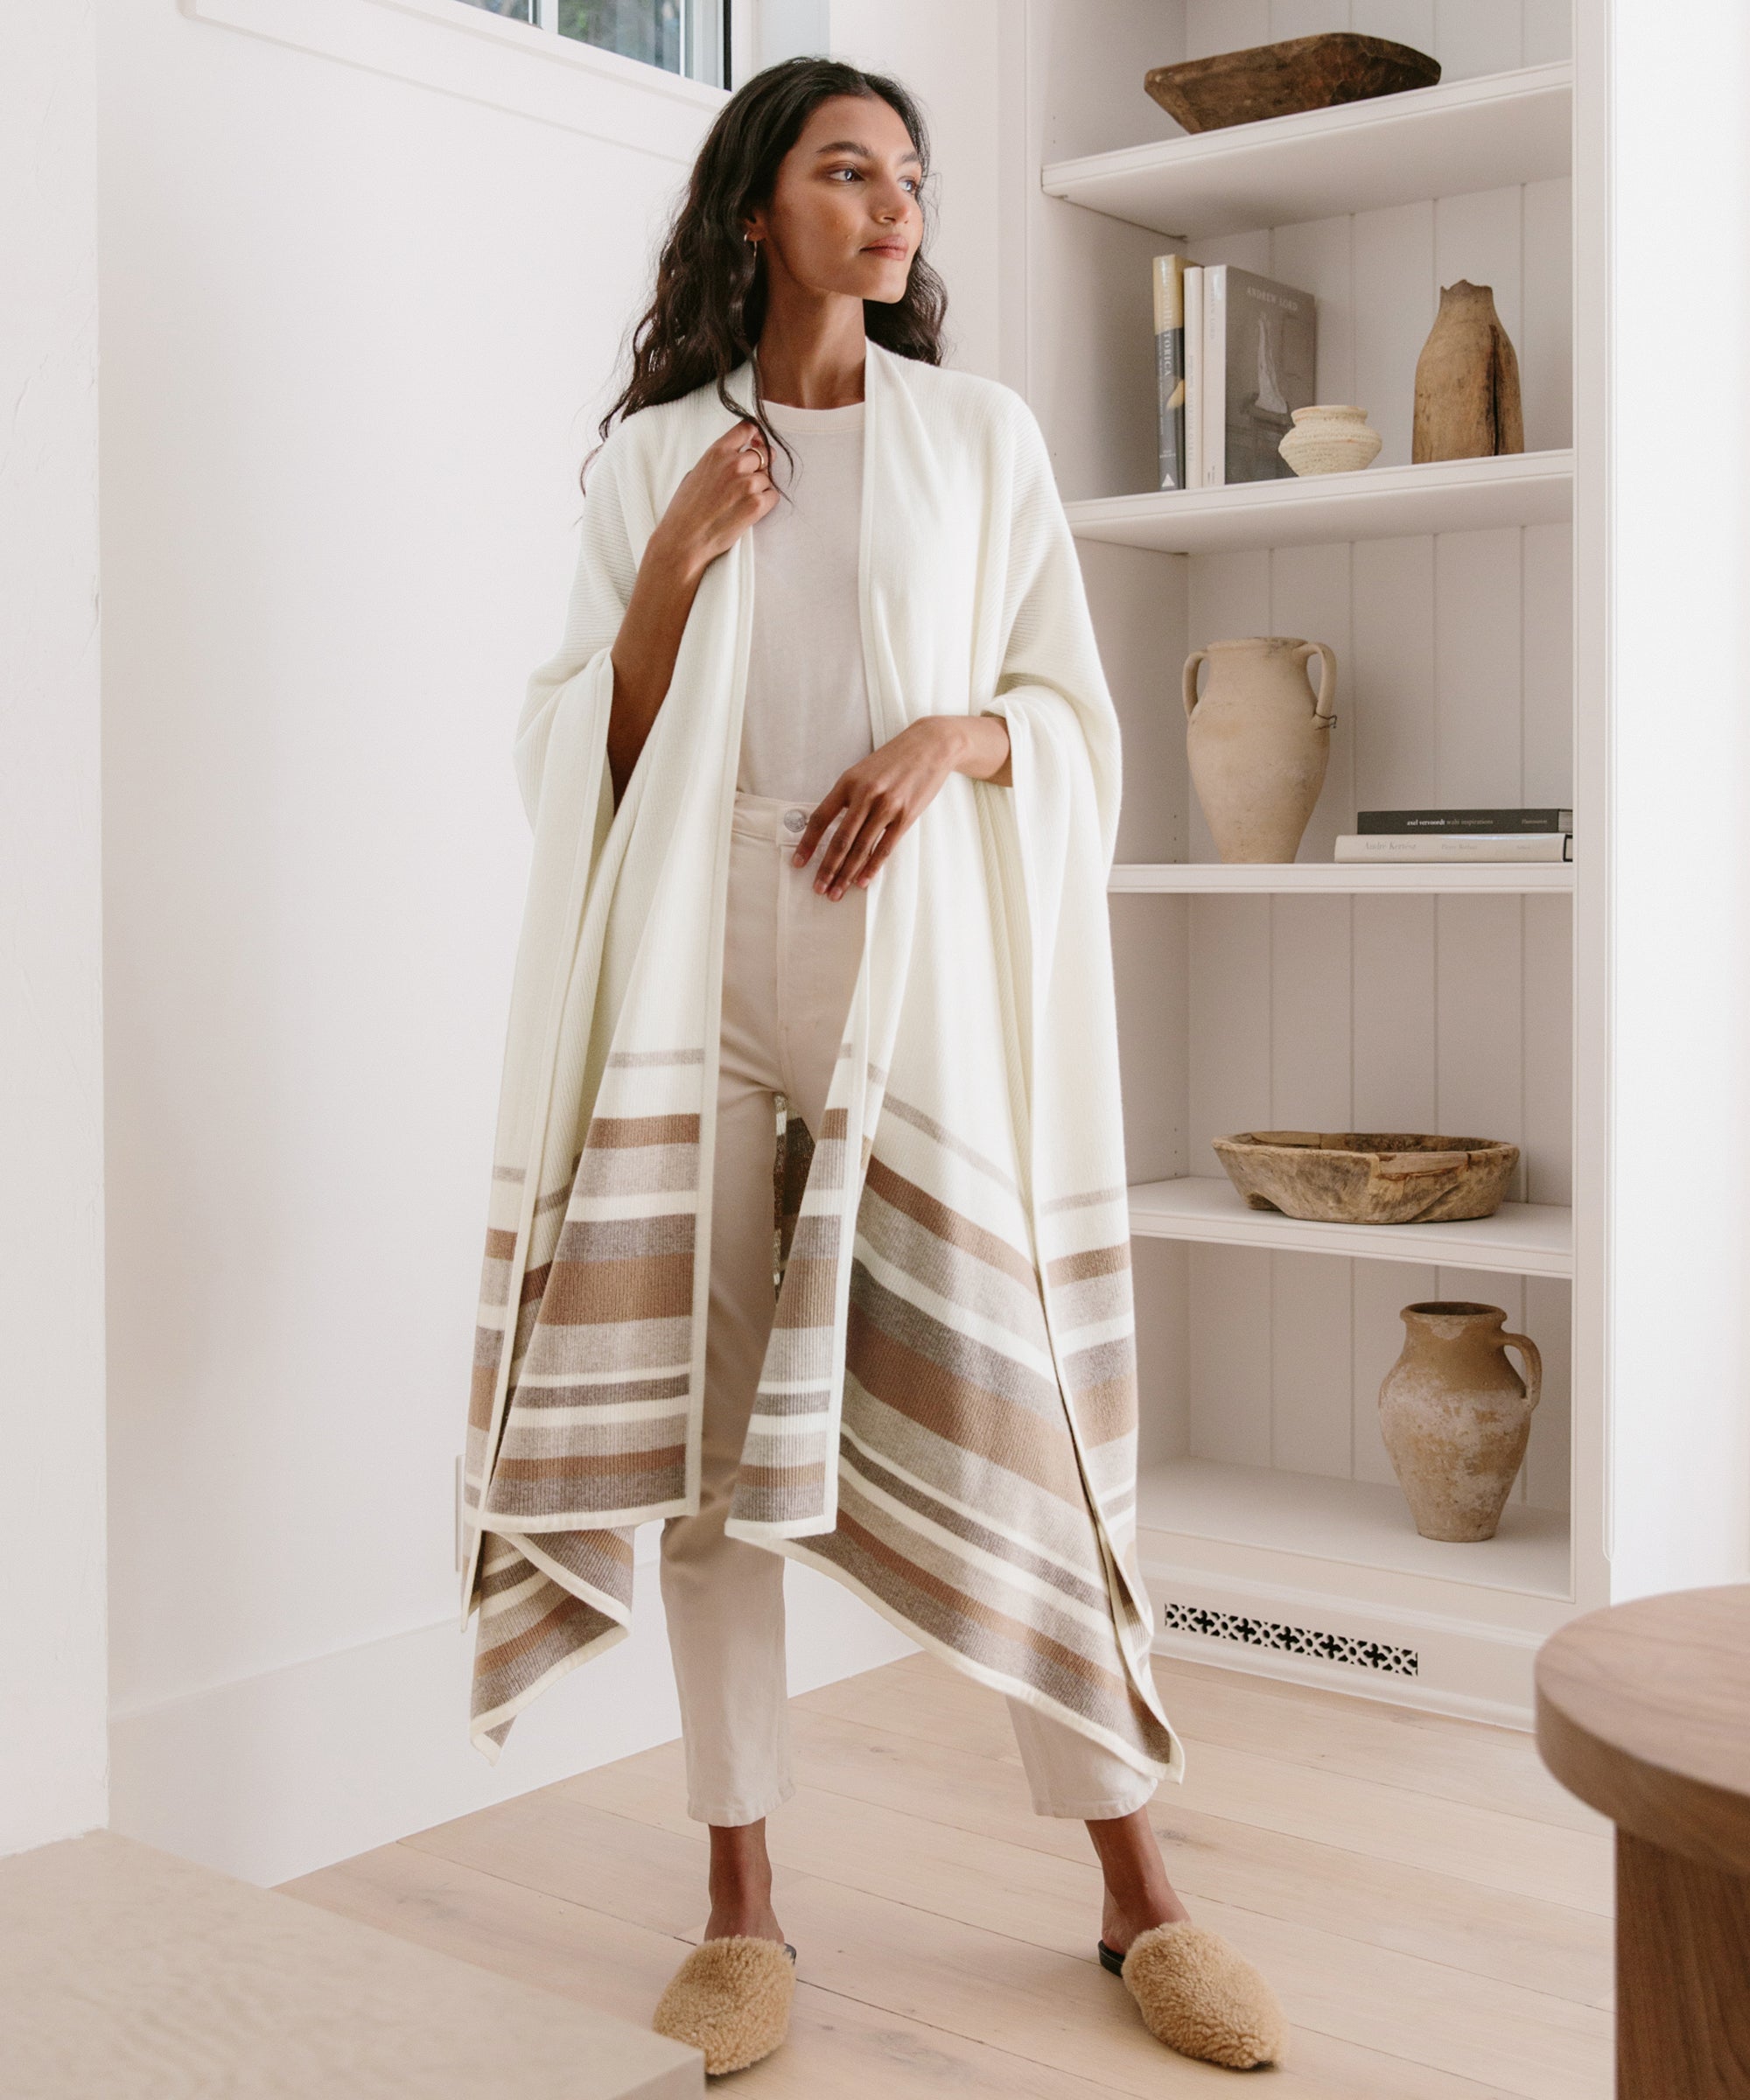 Jenni Kayne Women's Blanket Shawl in Ivory